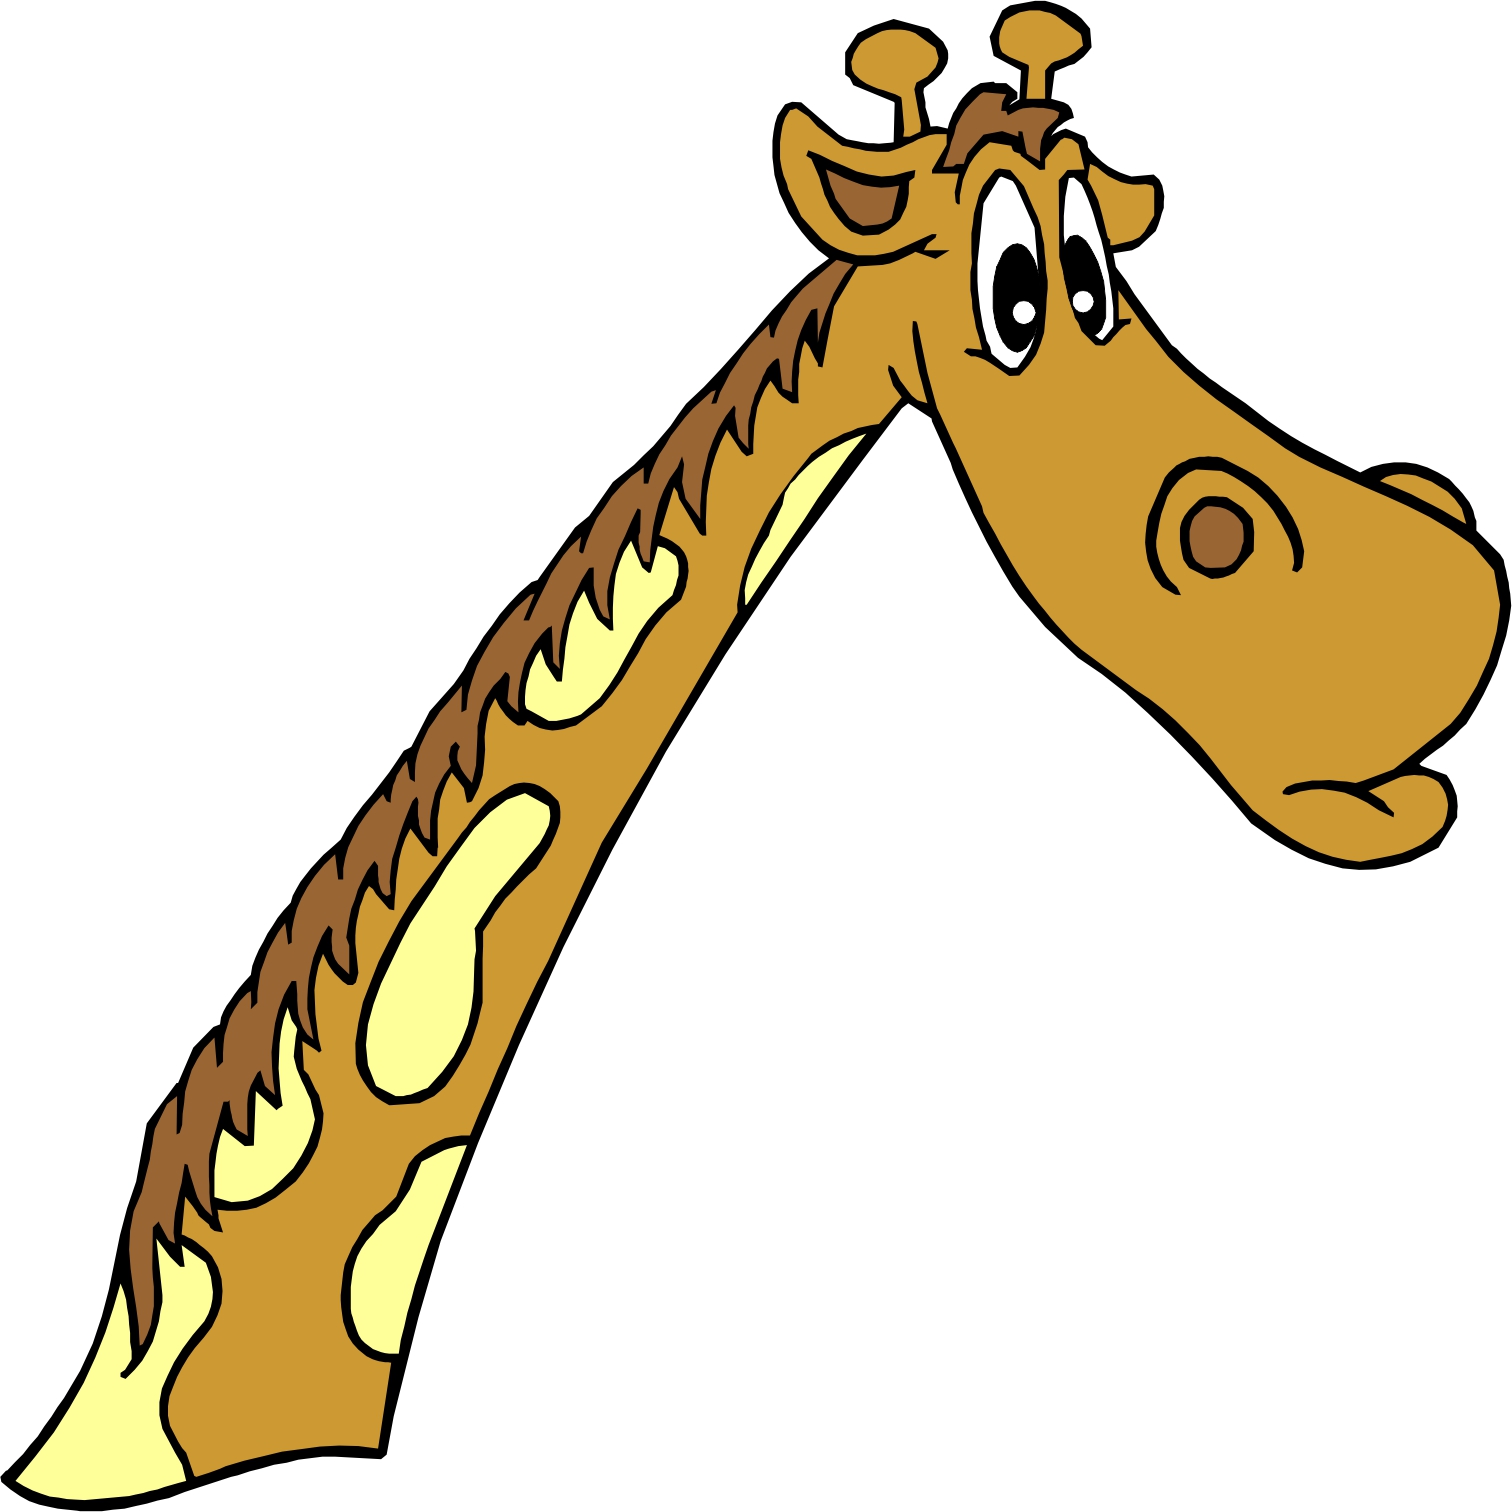 Giraffe neck clipart - ClipartFox